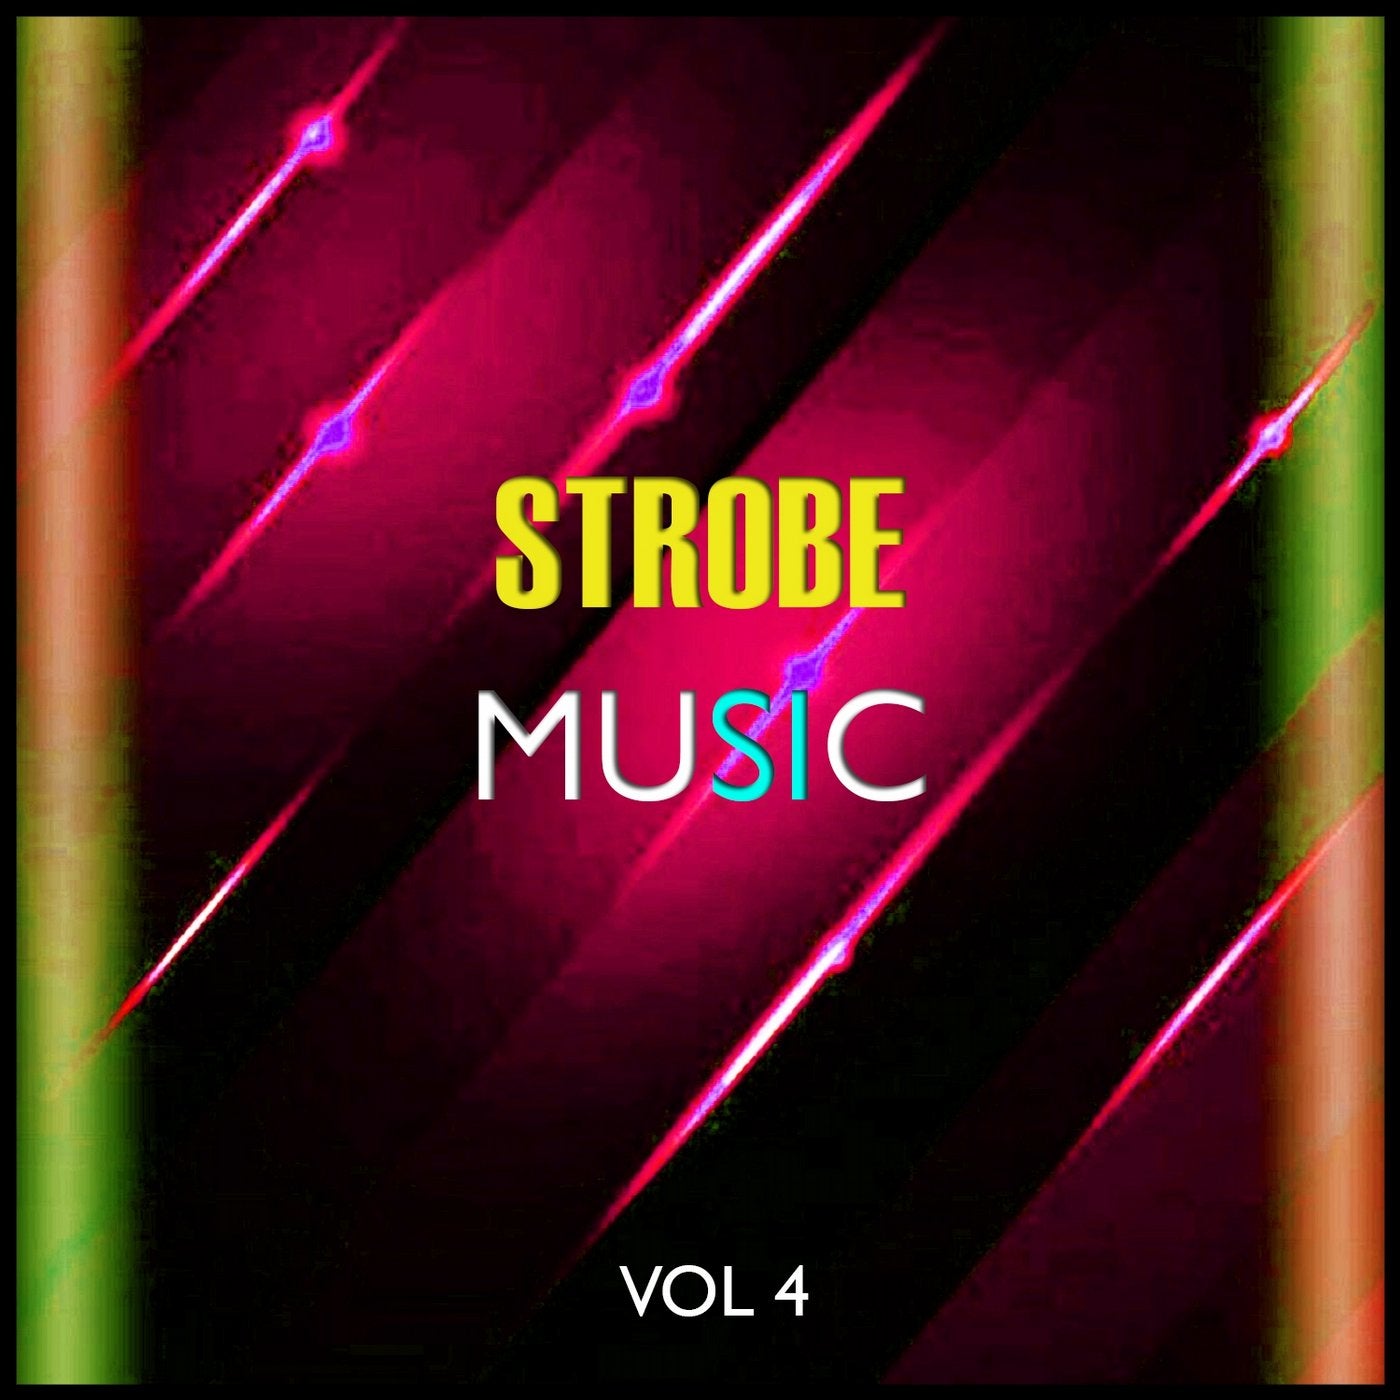 Strobe Music, Vol. 4